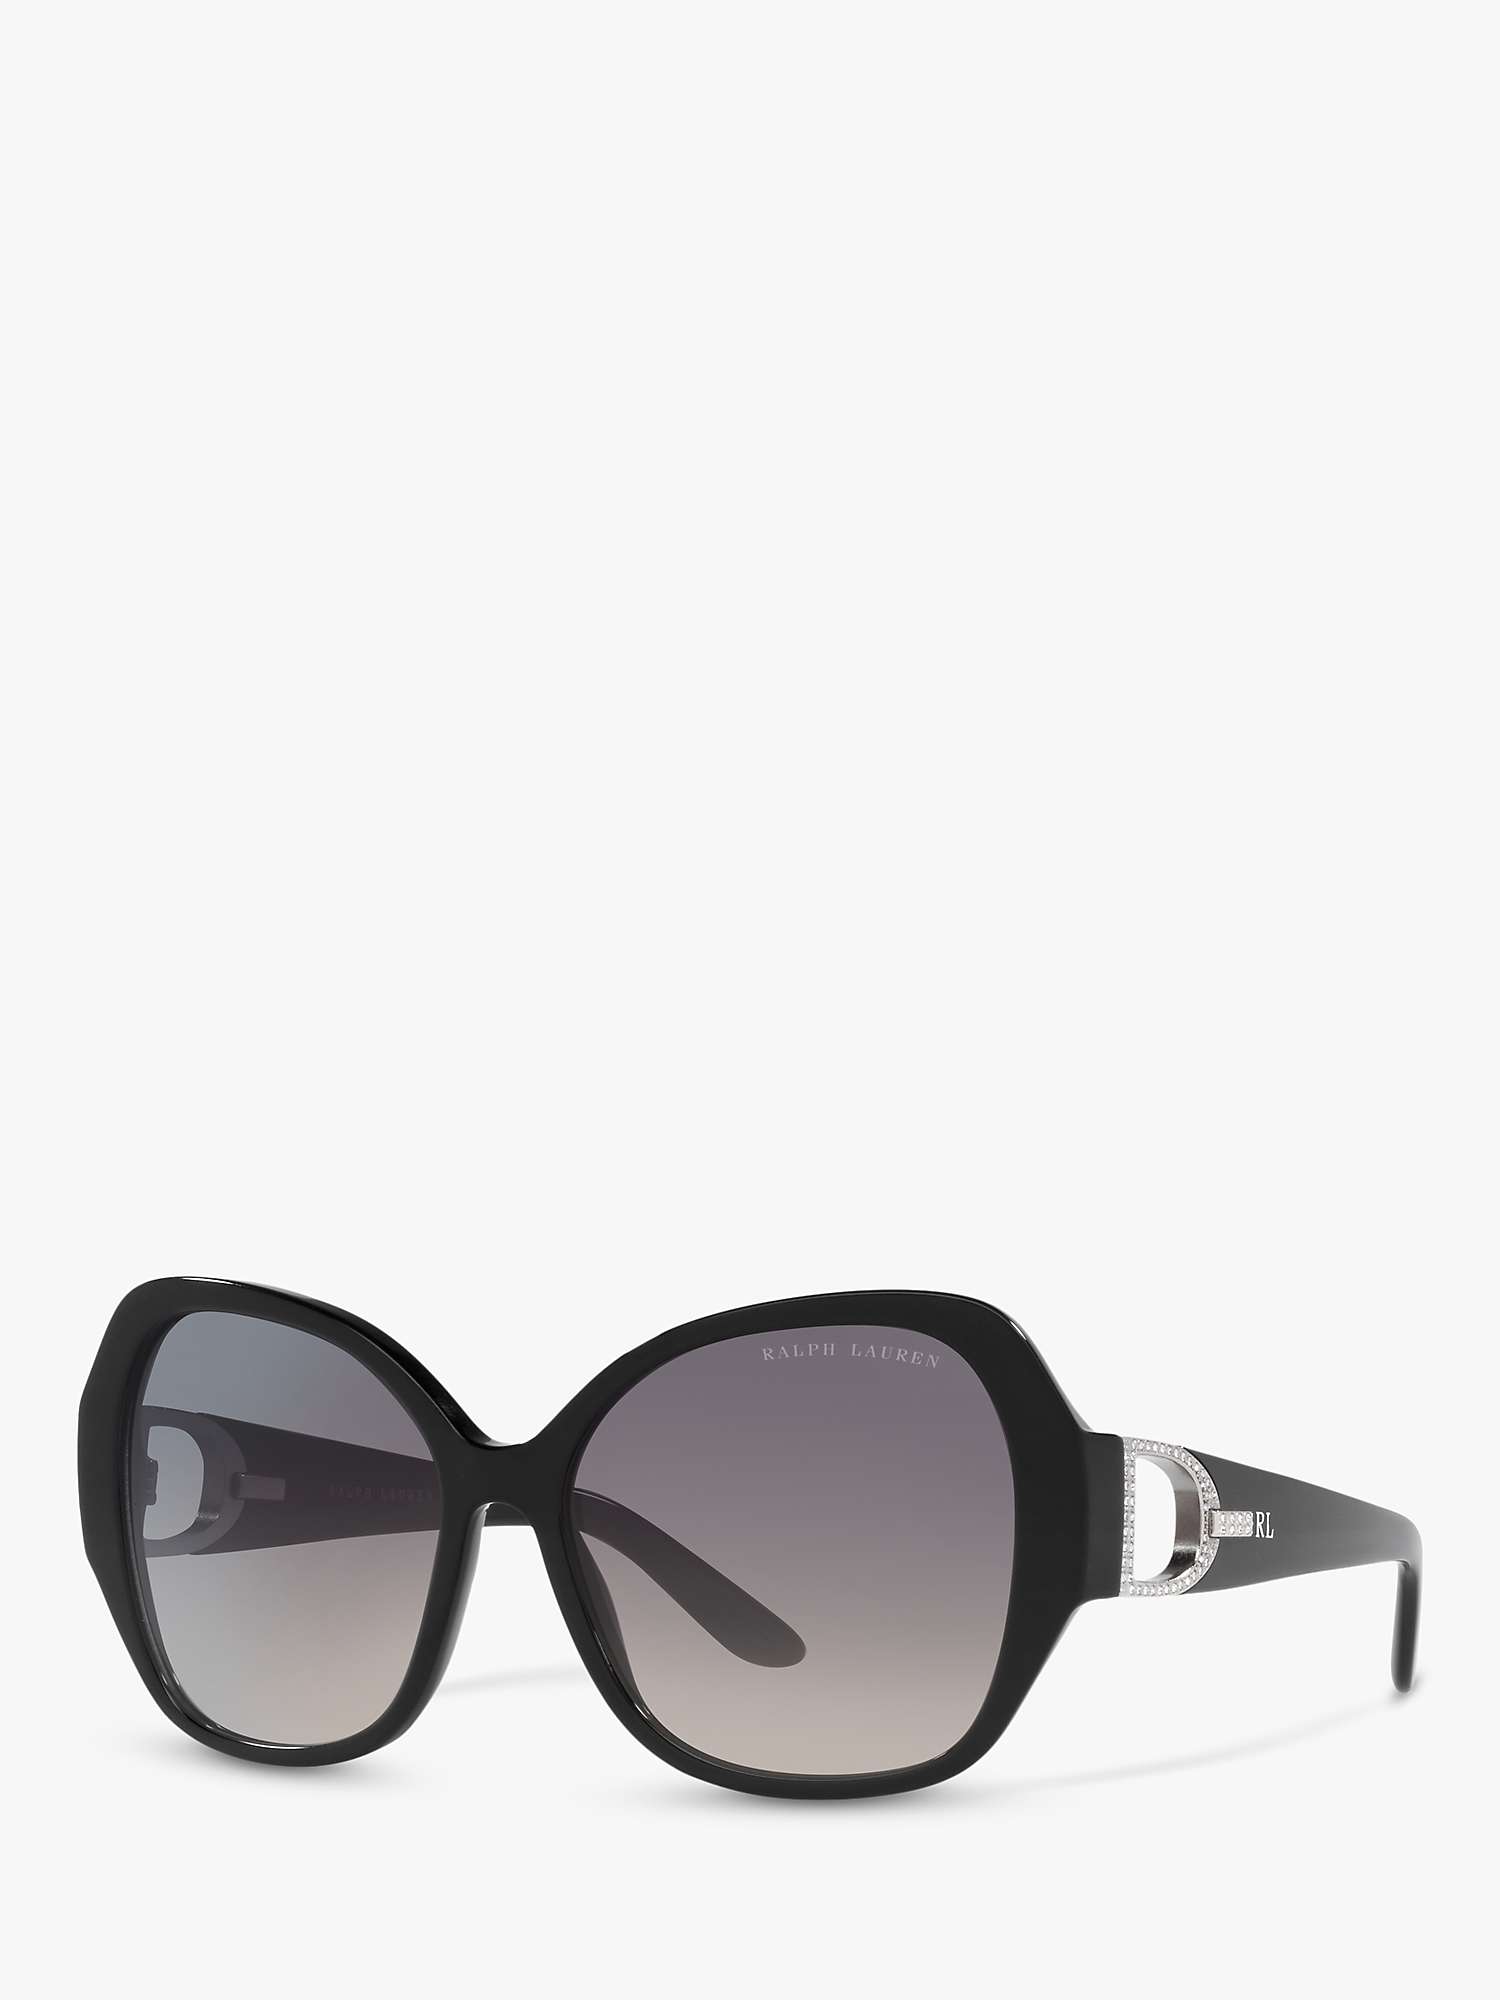 Buy Ralph Lauren RL8202B Women's Butterfly Sunglasses Online at johnlewis.com